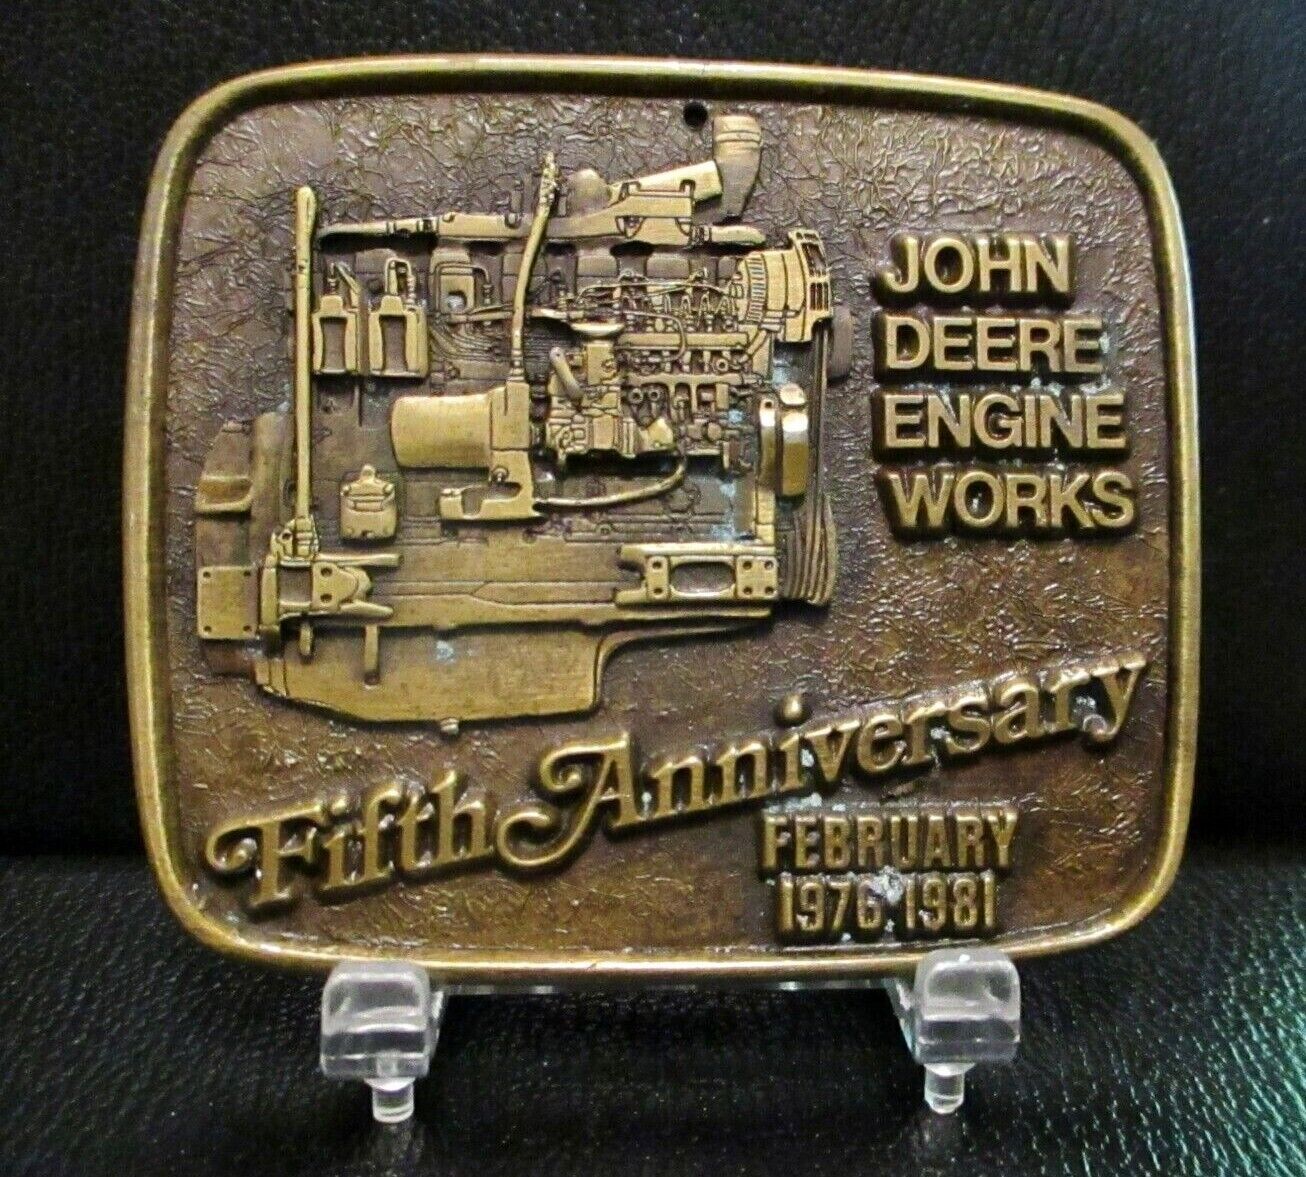 John Deere Engine Works Waterloo IA Medallion 5th Anniversary 1976 1981 Brass jd